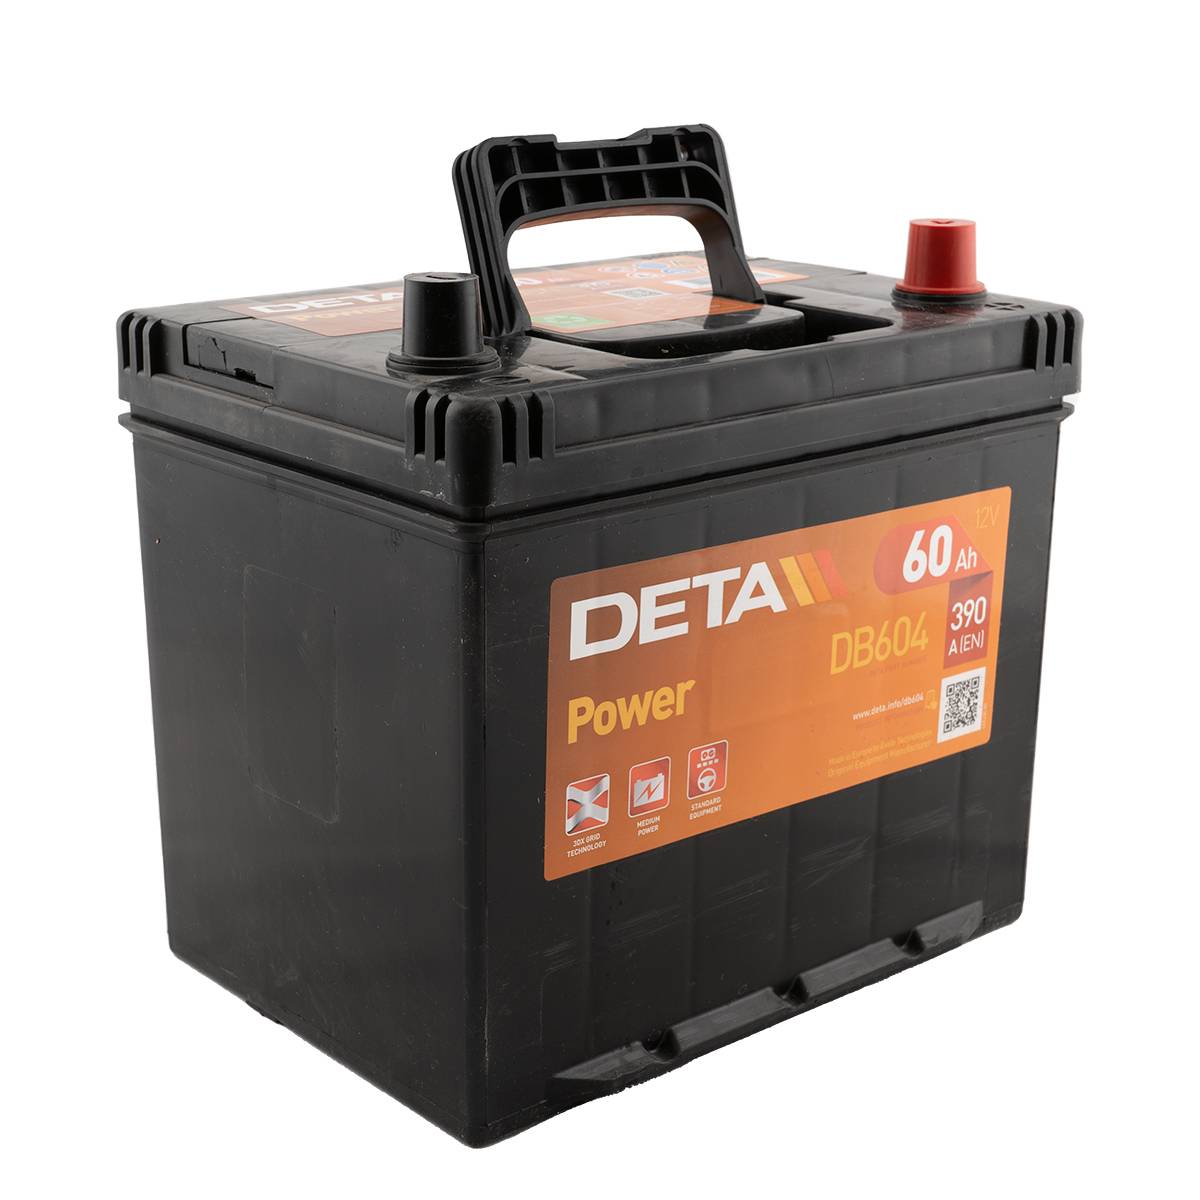 DETA DB604 Power 12V 60Ah 390A Autobatterie, Starterbatterie, Boot, Batterien für